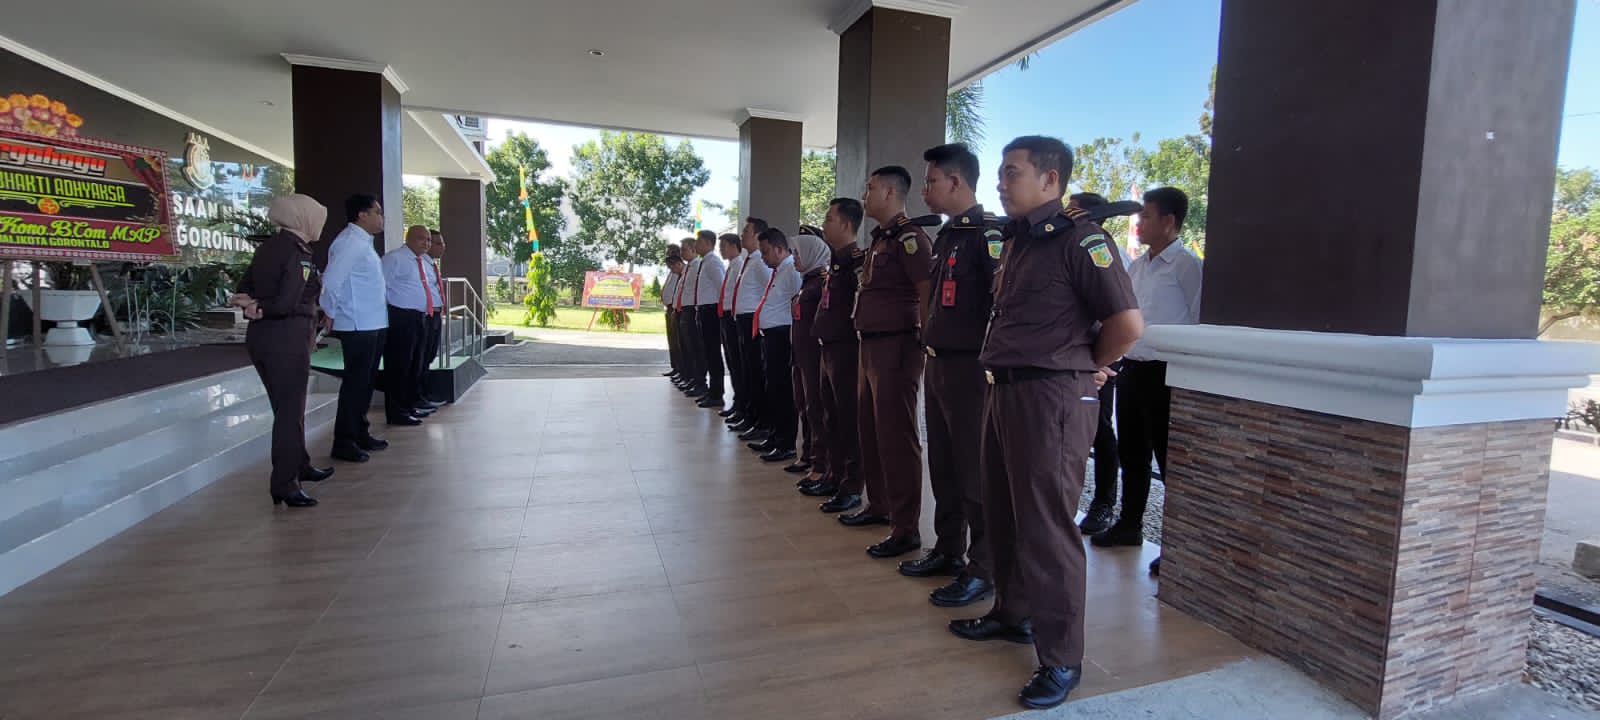 Satuan Reserse Kriminal Polres Gorontalo Kota melaksanakan apel bersama Kejaksaan Negeri Kota Gorontalo di halaman kantor kejaksaan yang dipimpin langsung Kajari Kota Gorontalo M.Rudi, pada Senin 25 Juli 2022.